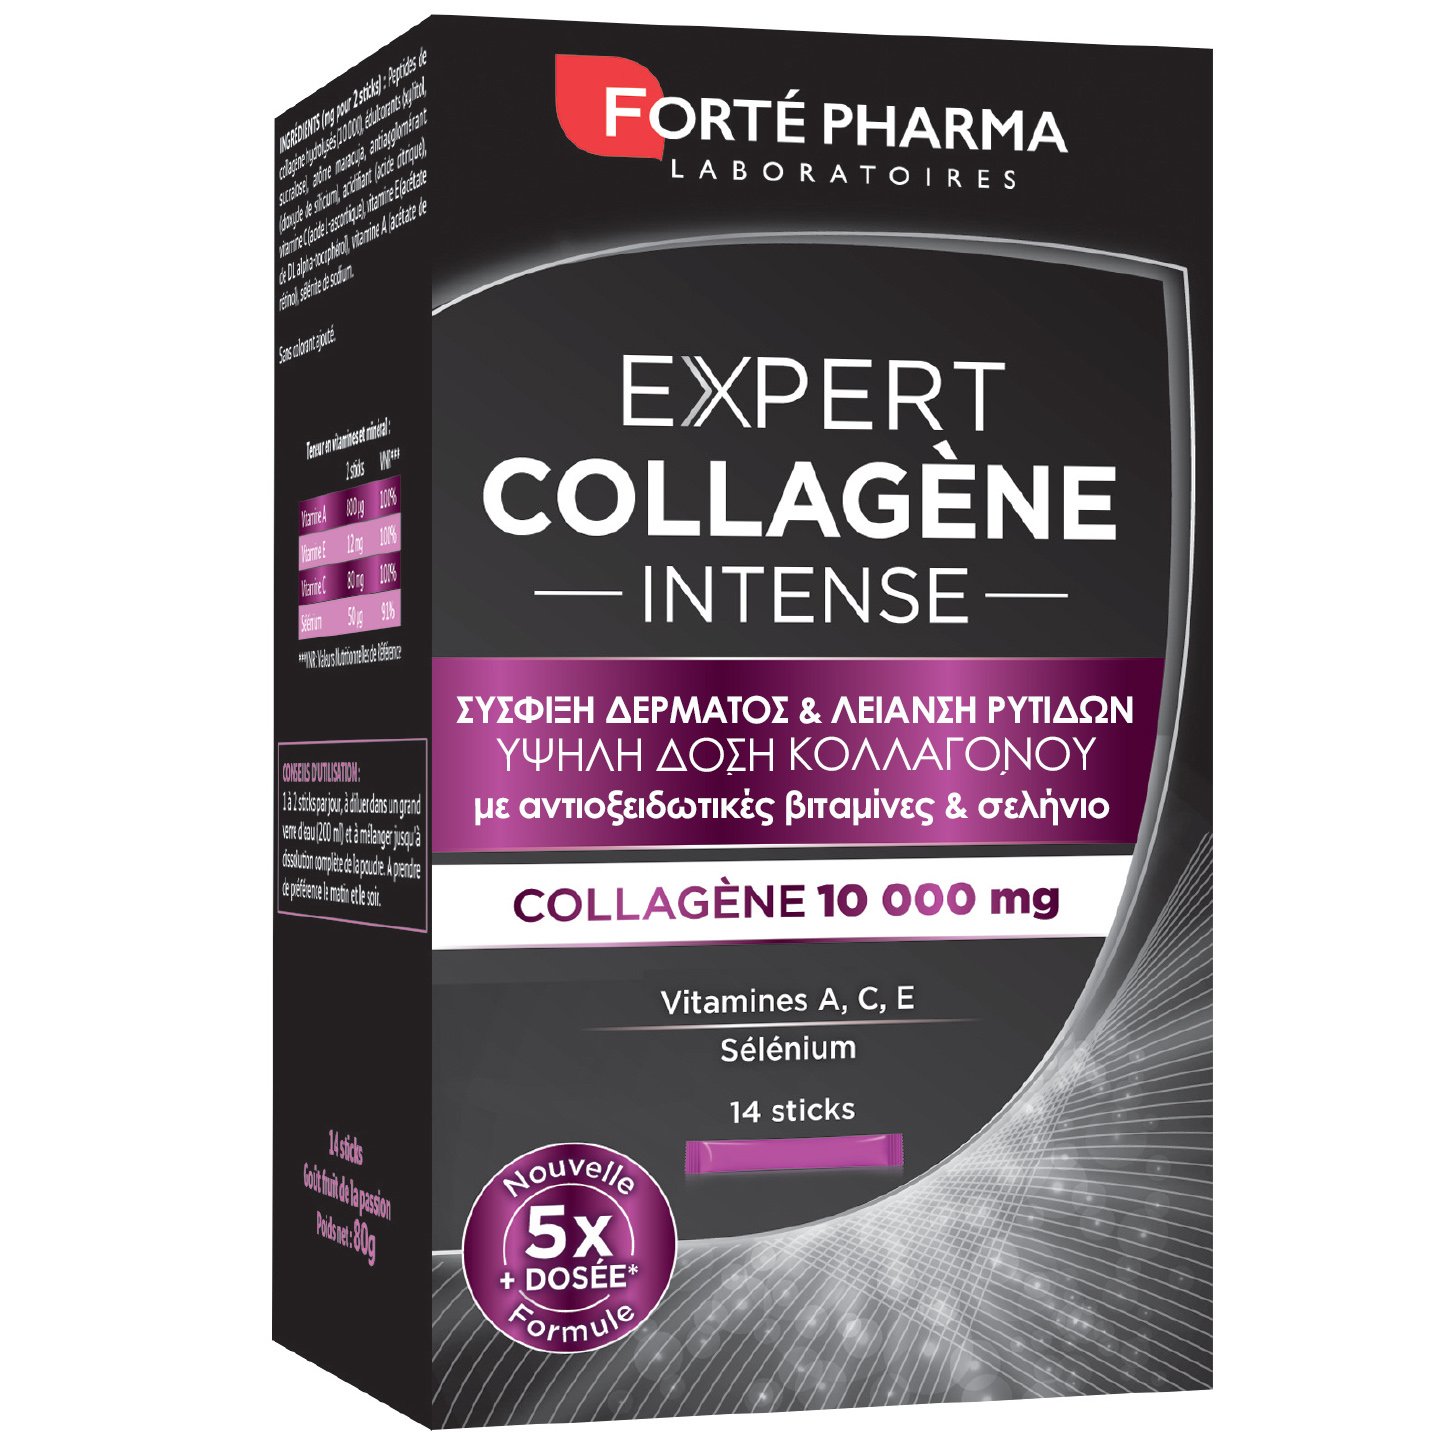 Forte Pharma Expert Collagene Intense Συμπλήρωμα Διατροφής σε Σκόνη για Σύσφιξη Δέρματος, Λείανση Ρυτίδων με Κολλαγόνο & Βιταμίνες 14 Sticks